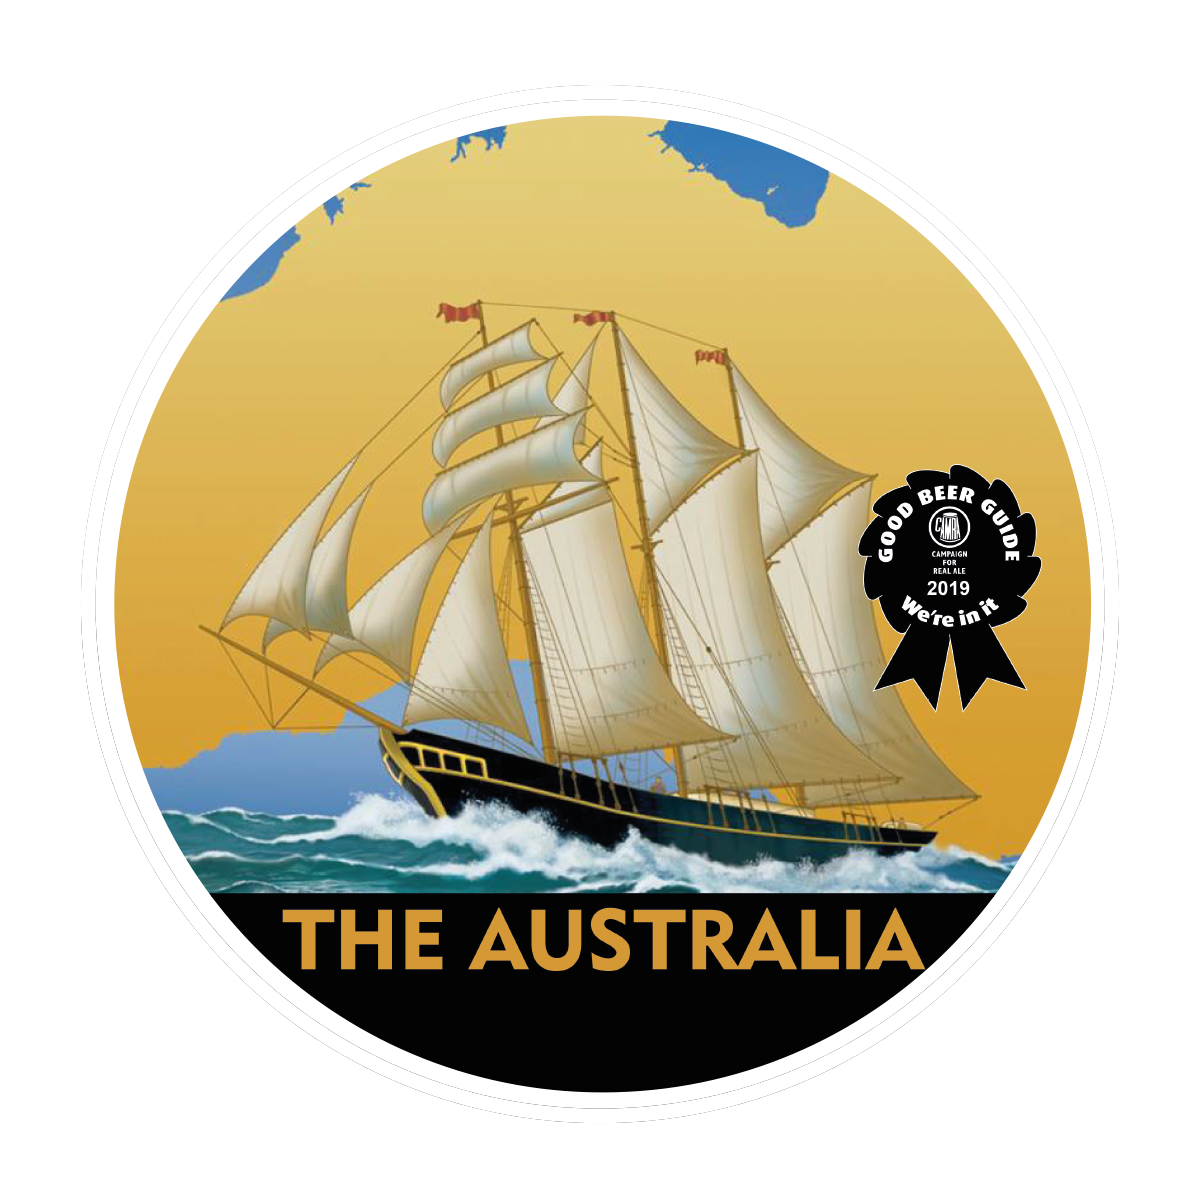 The Australia | Purple Moose Brewery Ltd